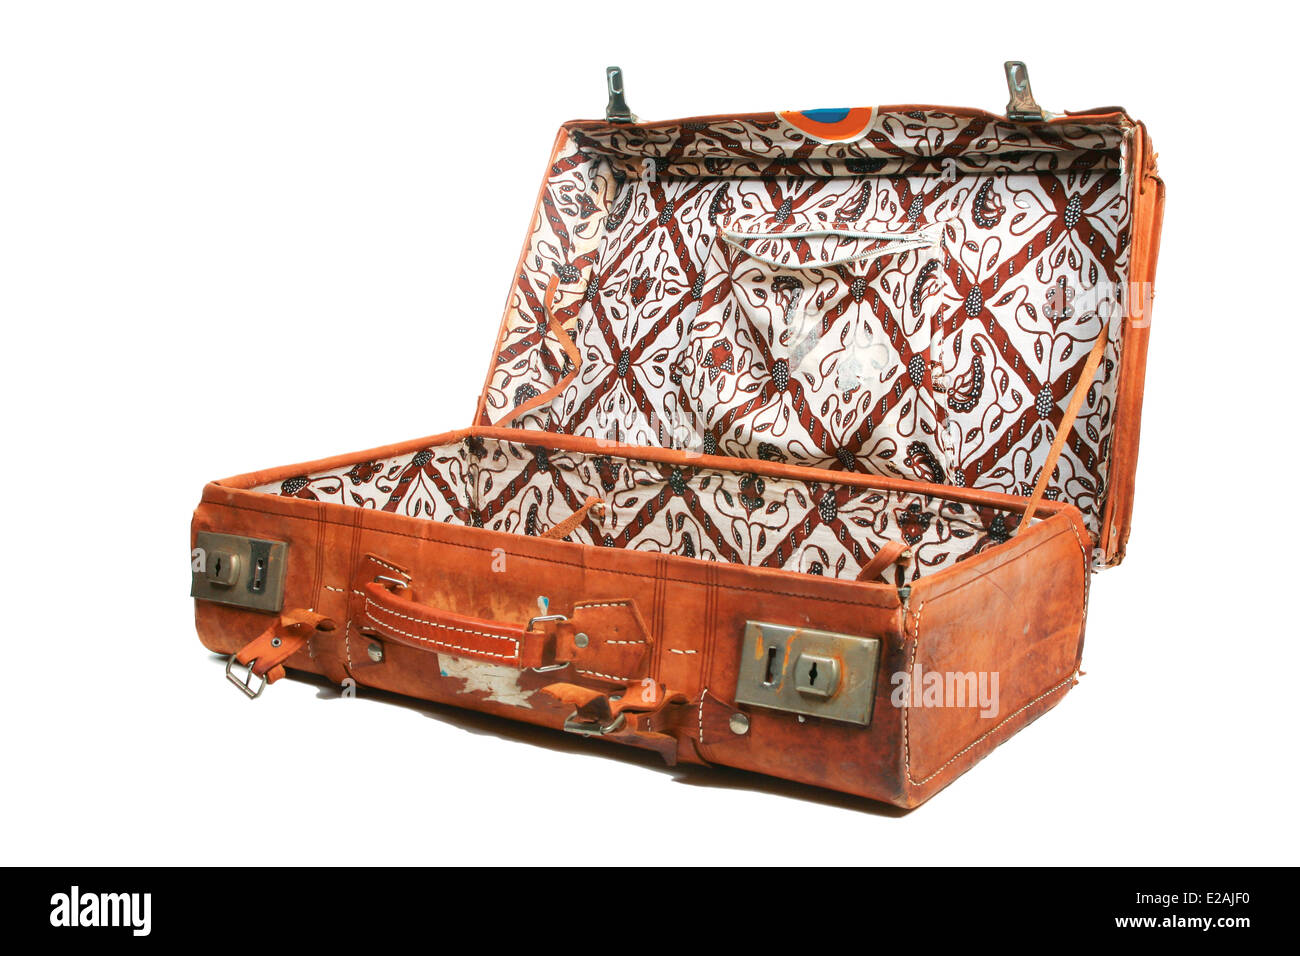 Offener Leder Koffer mit Batik Baumwoll-Futter Stockfotografie - Alamy